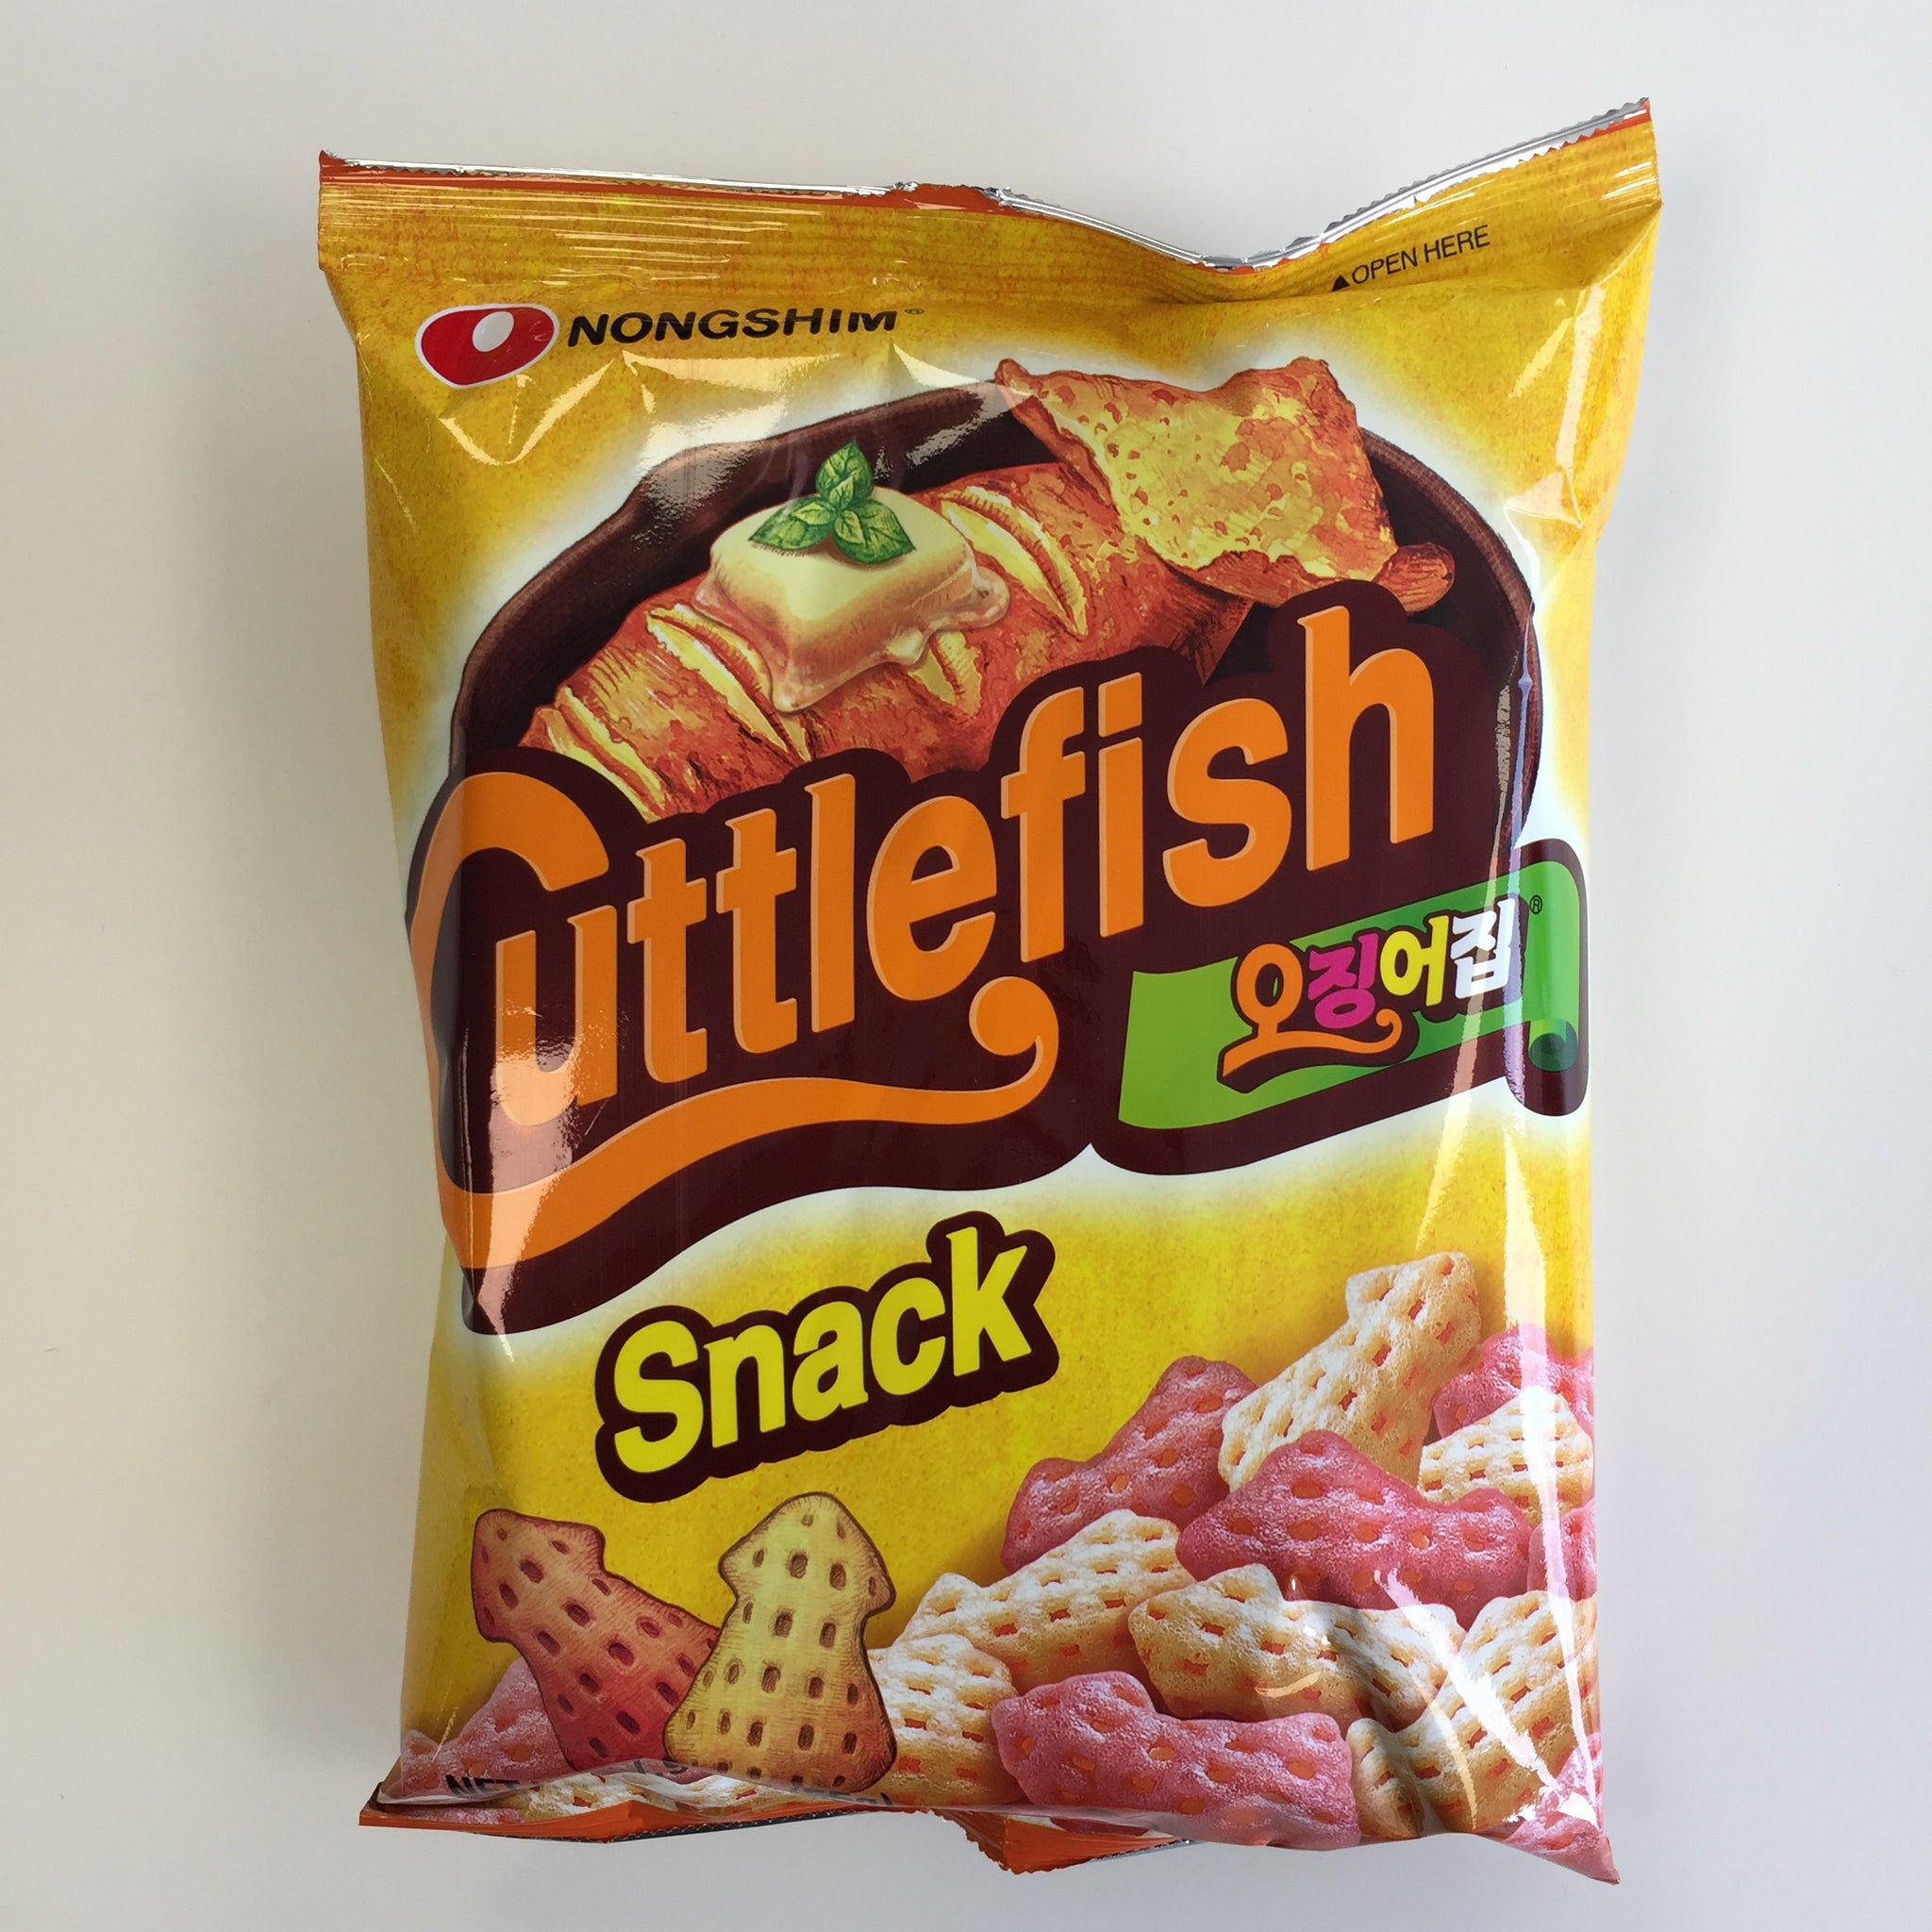 Nongshim 農心墨魚條 55g (Nongshim Cuttlefish Snack 55g)